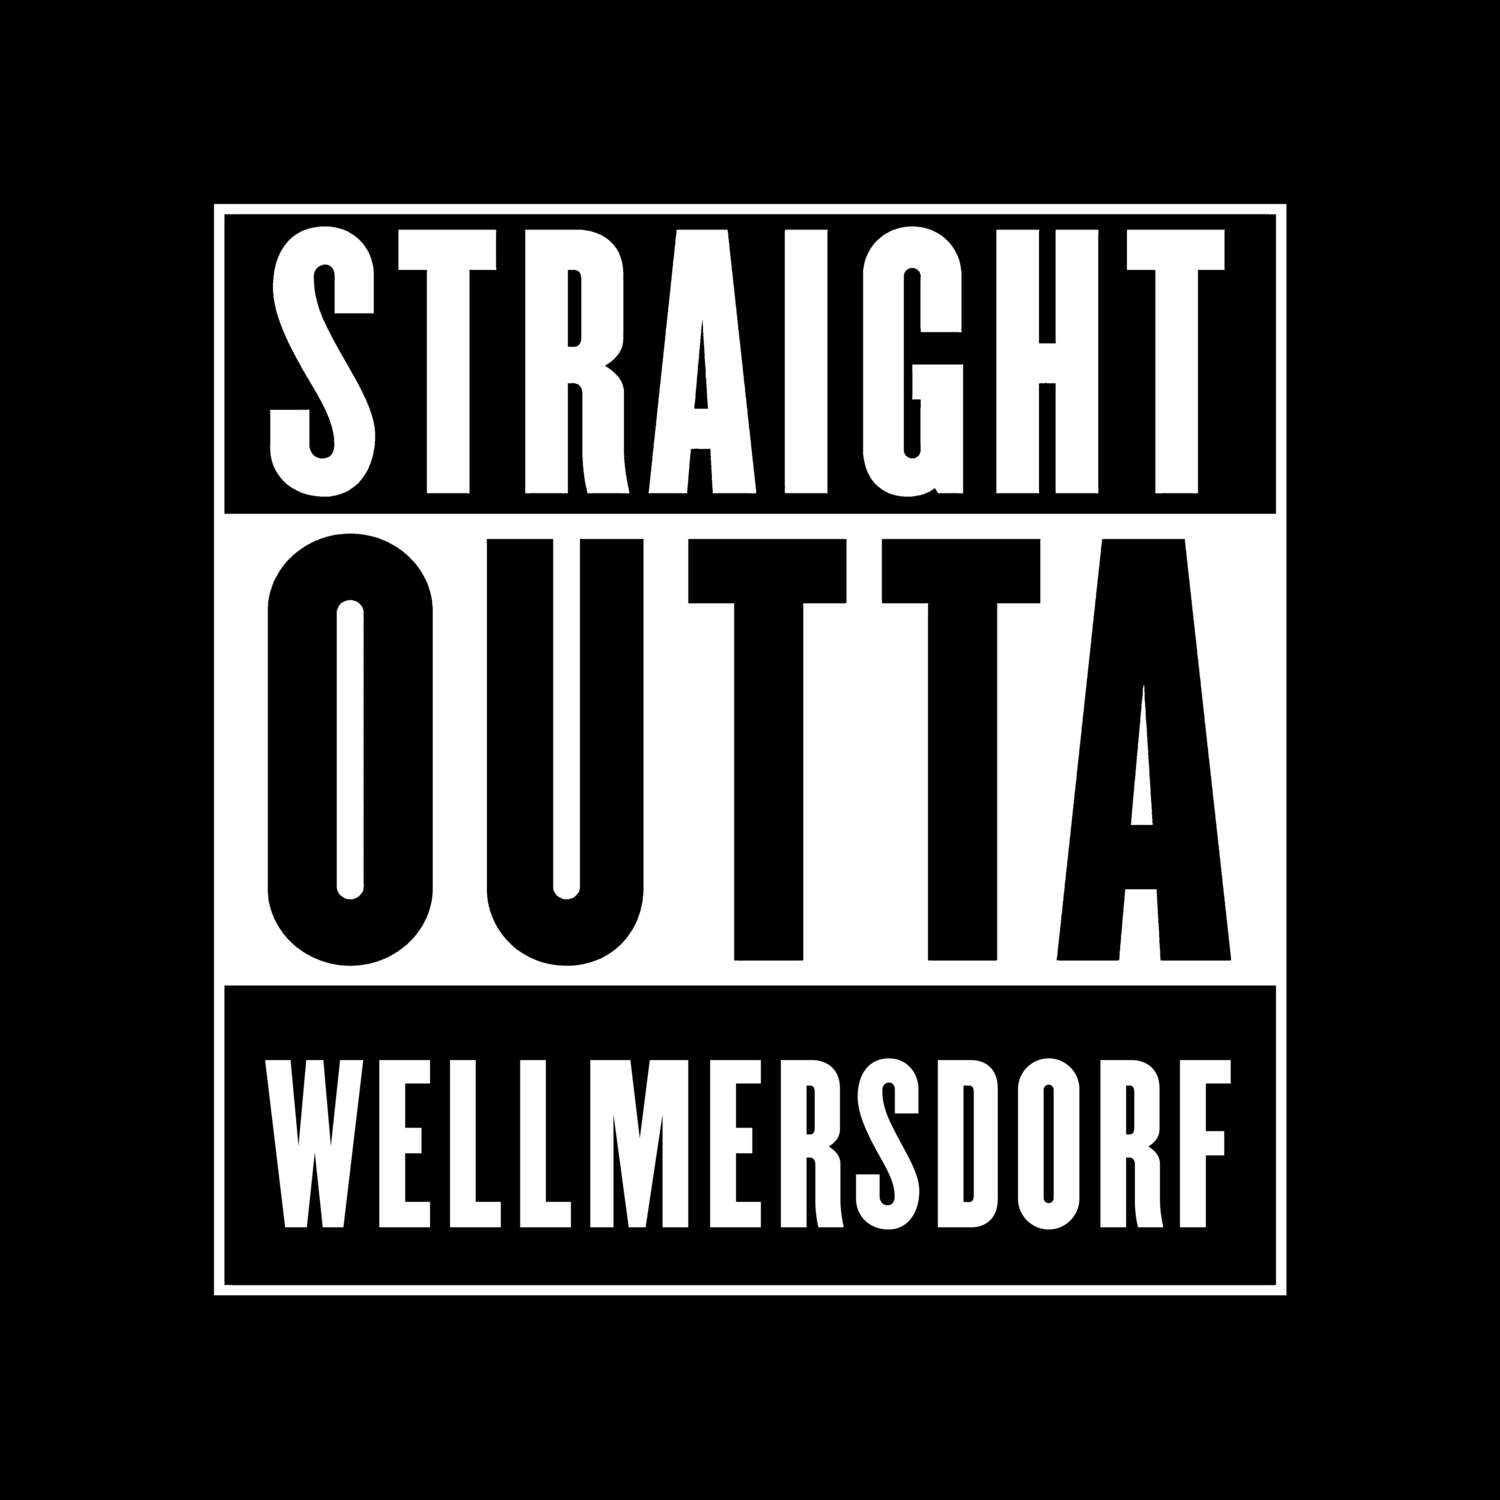 Wellmersdorf T-Shirt »Straight Outta«